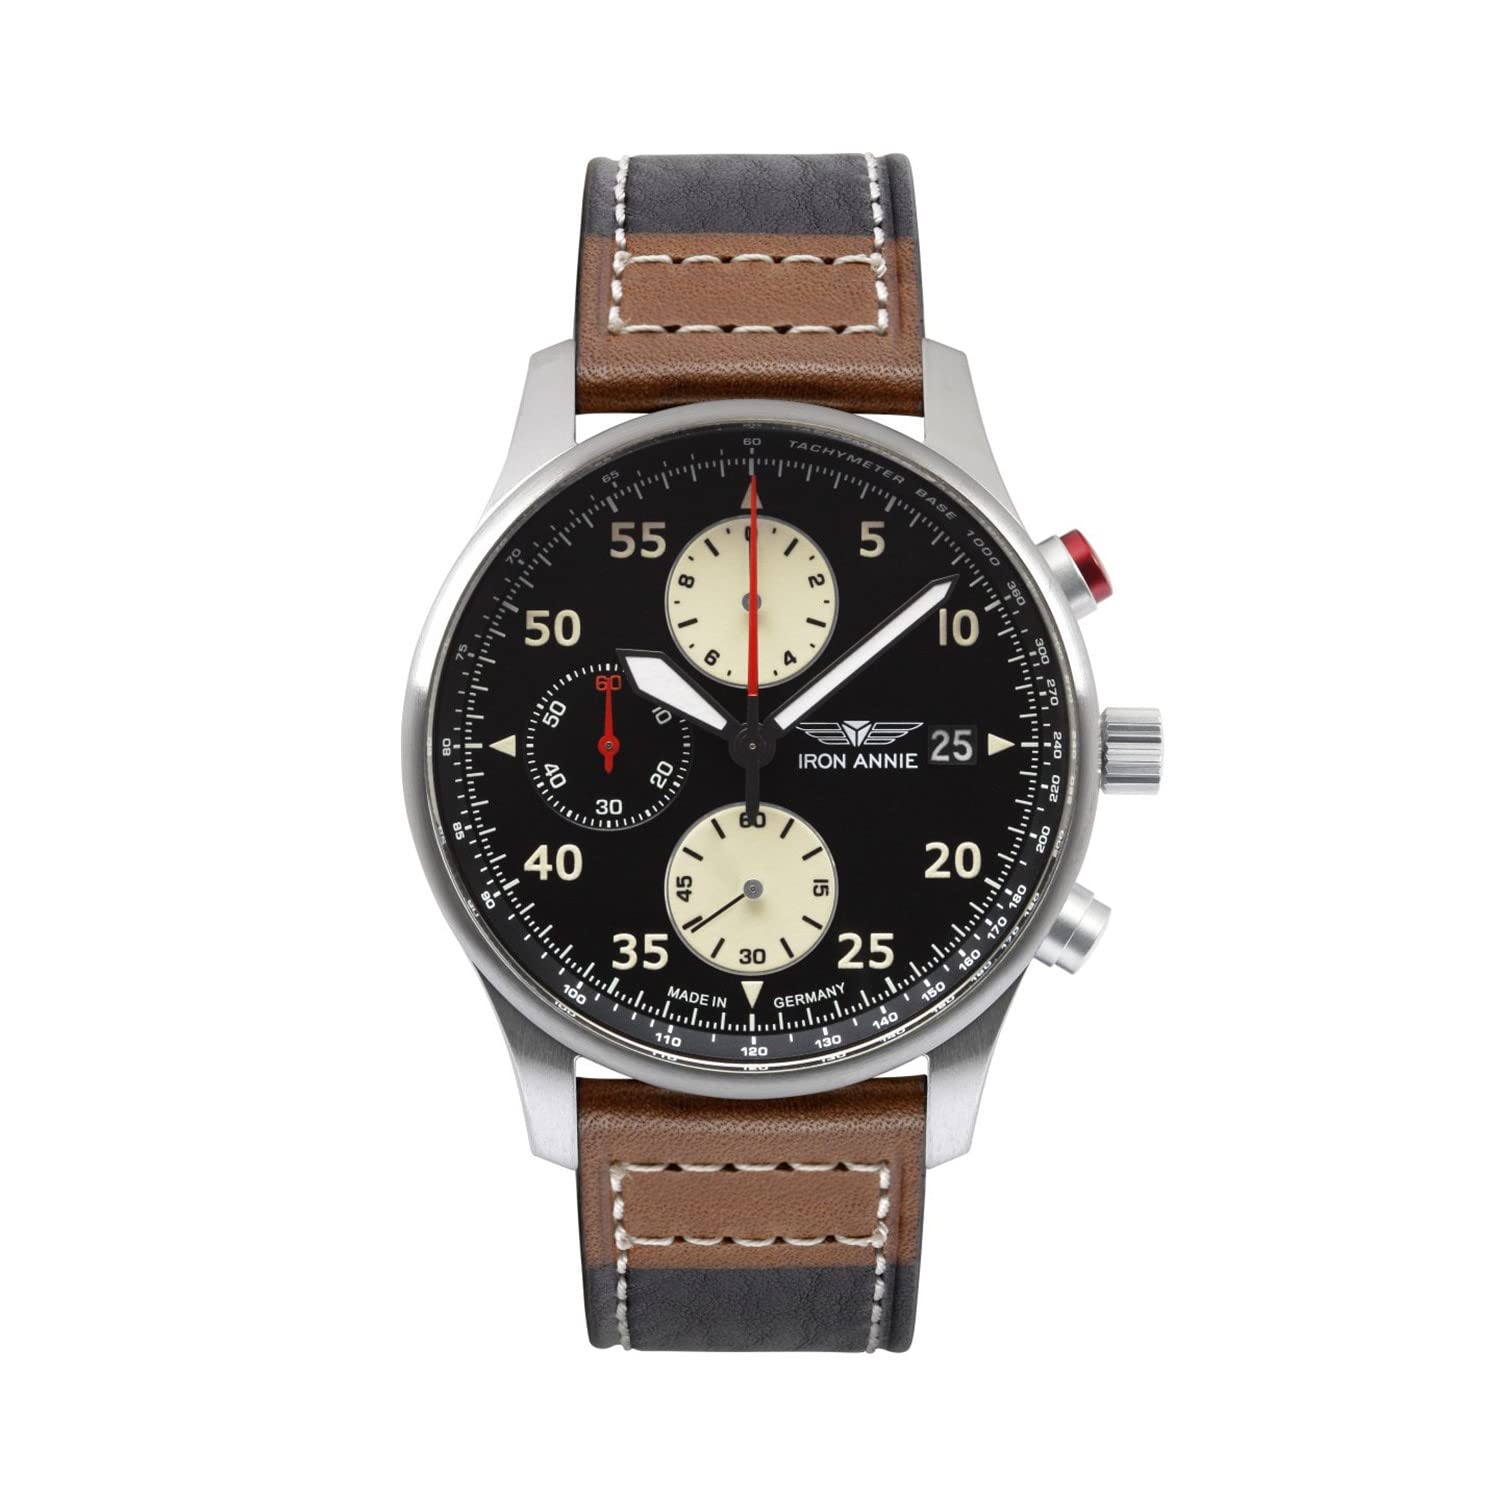 Iron Annie 5670-2QZ Aviator Watch amazon.co.jp Limited Model F13 TEMPELHOF Chronograph Quartz Watch, black silver brown